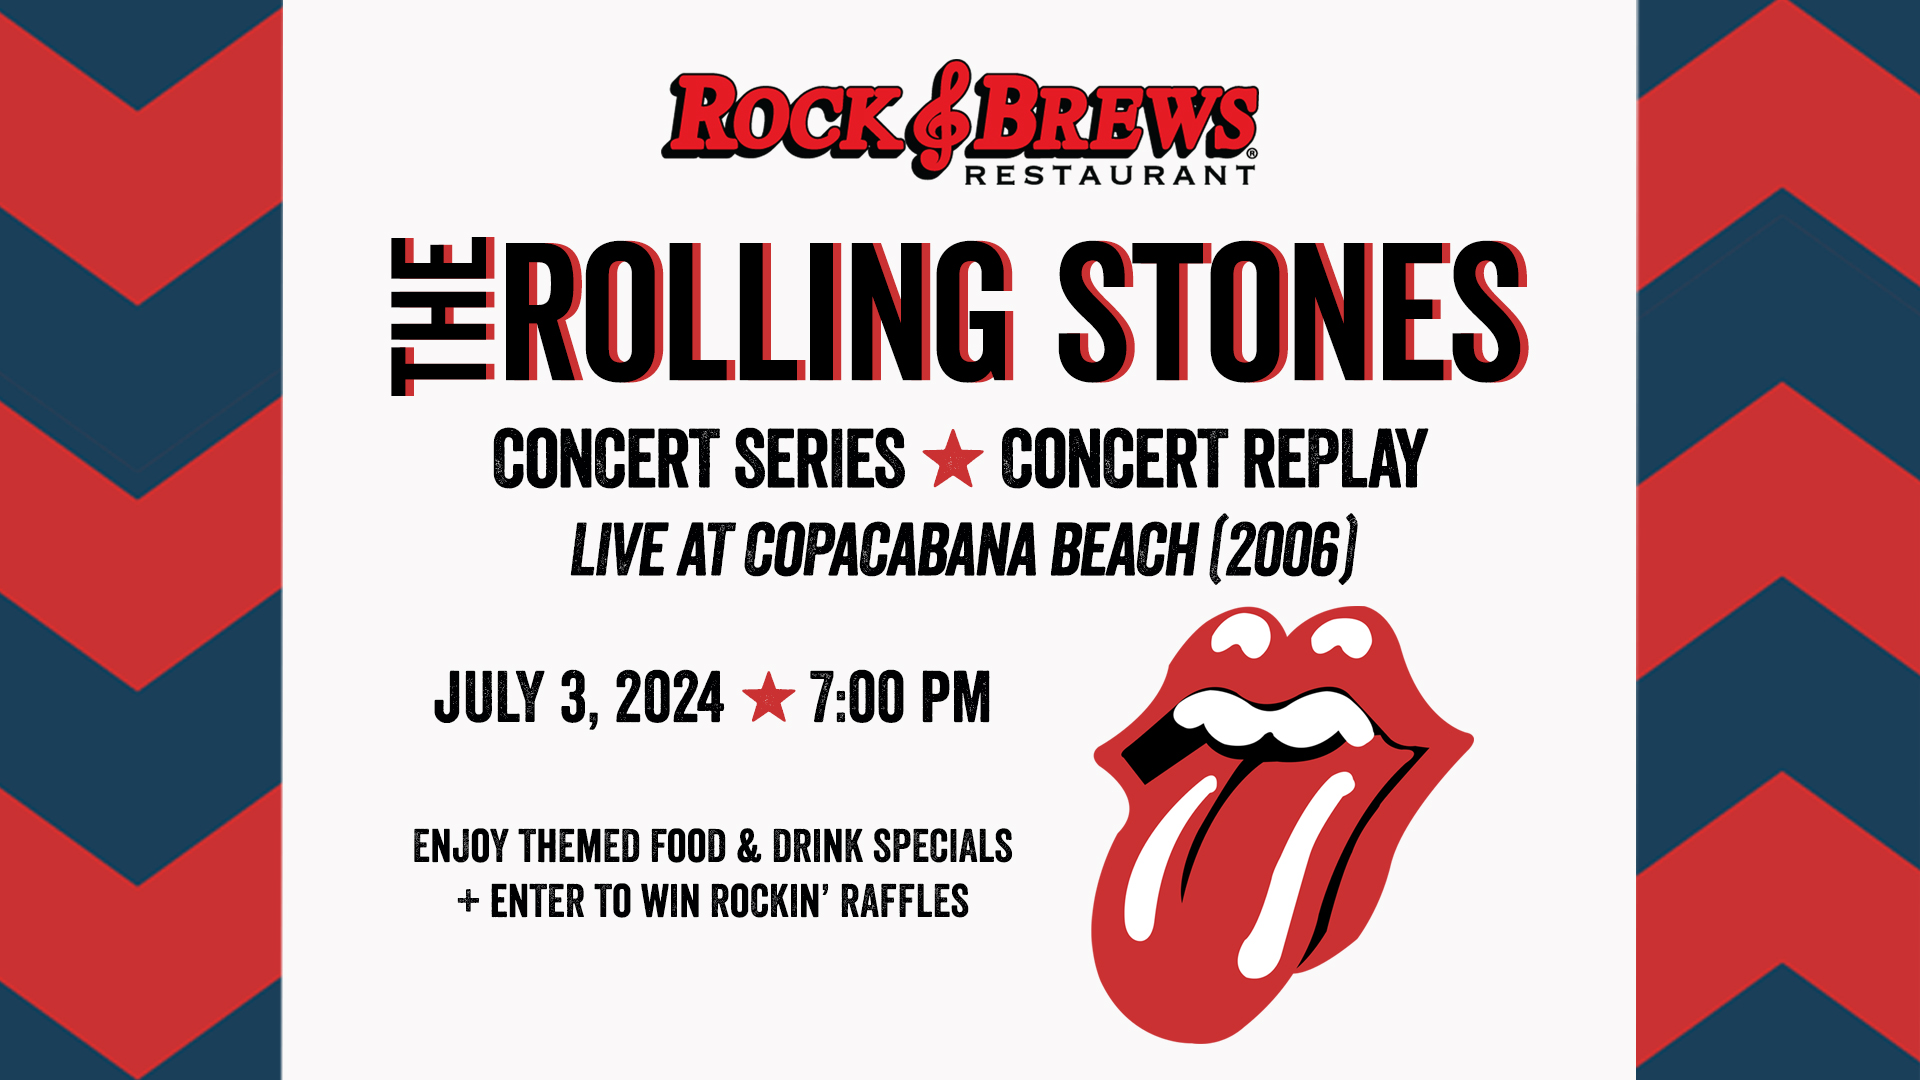 Rolling Stones Concert Series at Rock & Brews